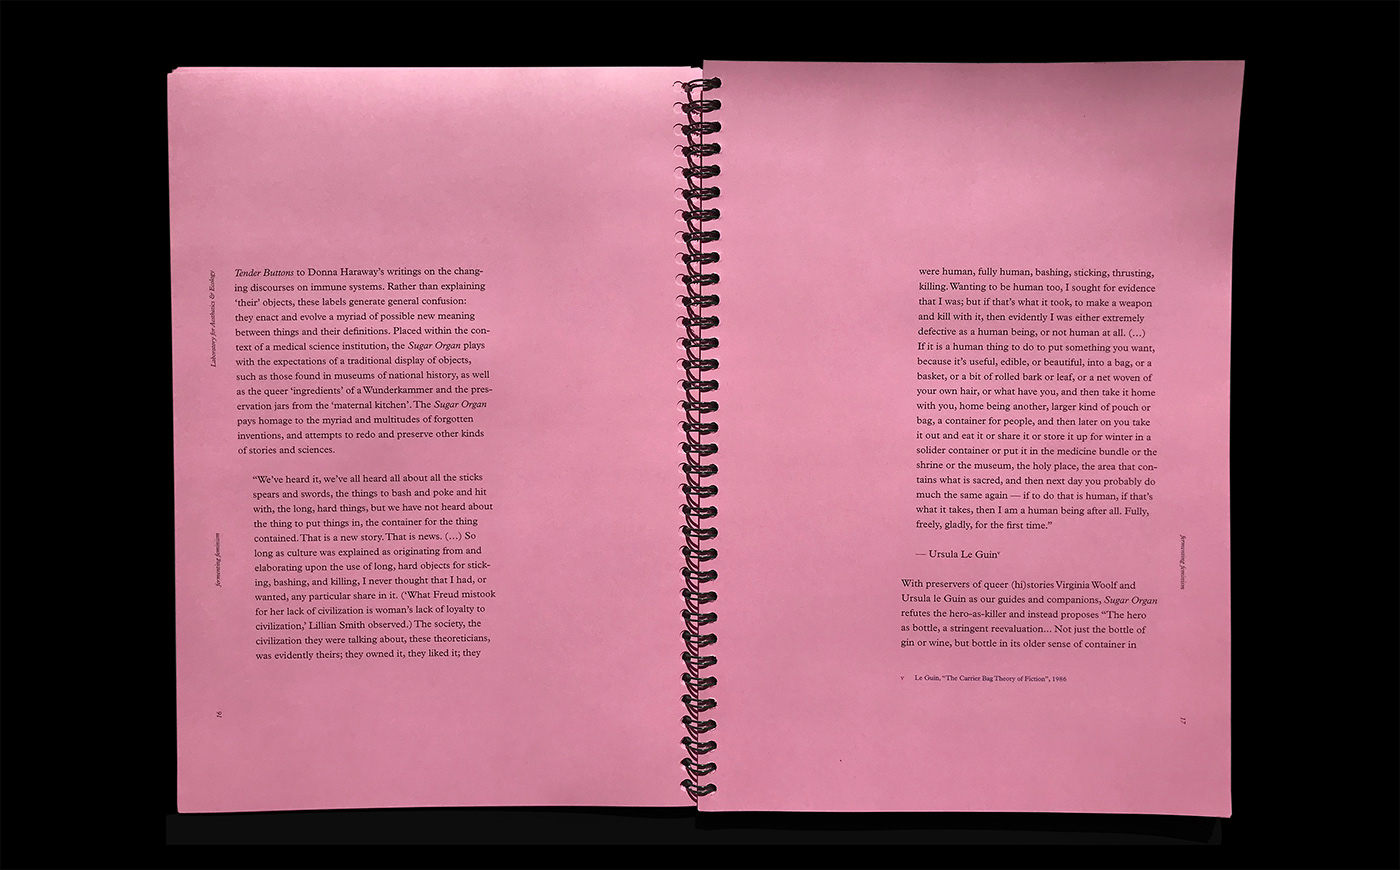 Adobe Portfolio feminism book design art book cover graphic design  fermentation pink